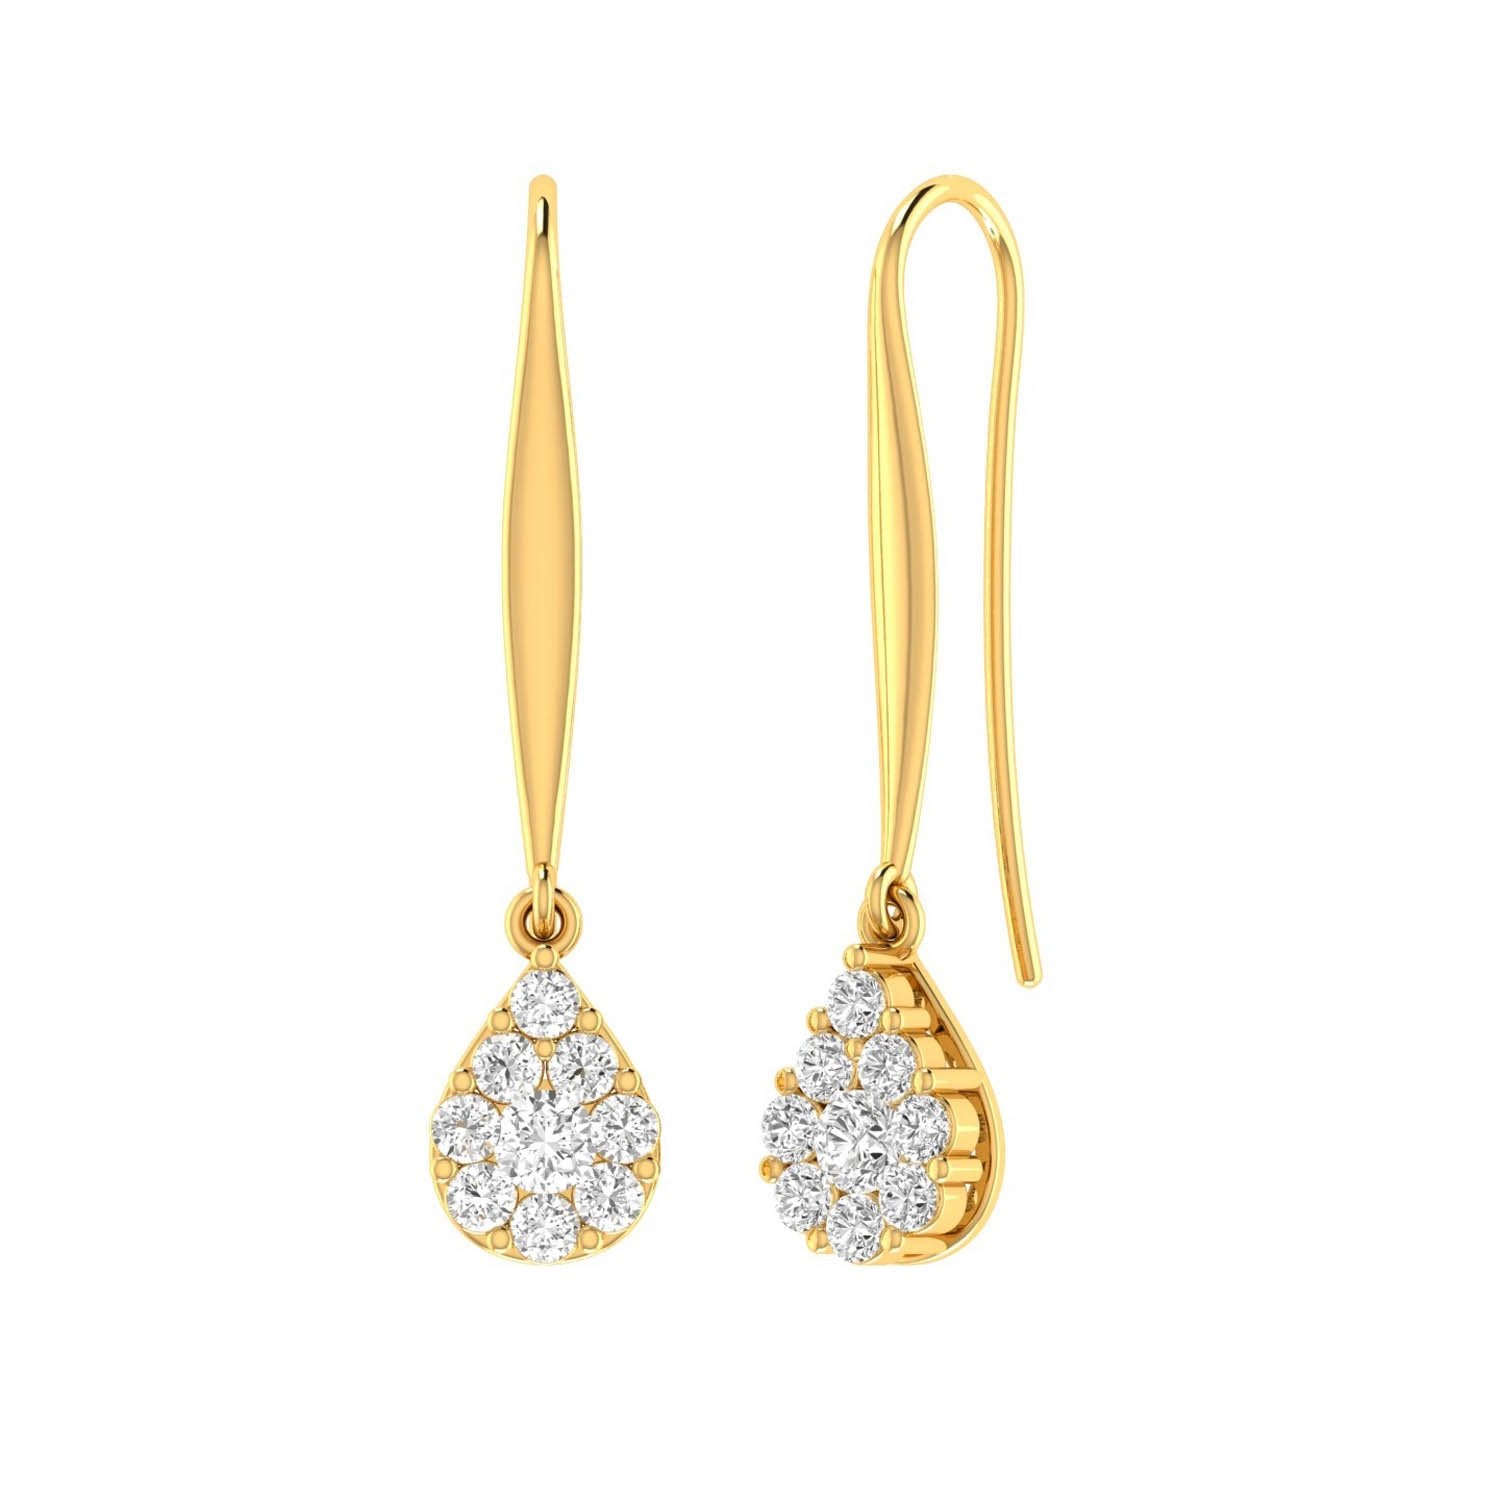 Tear Drop Hook Diamond Earrings with 0.15ct Diamonds in 9K Yellow Gold - 9YTDSH15GH